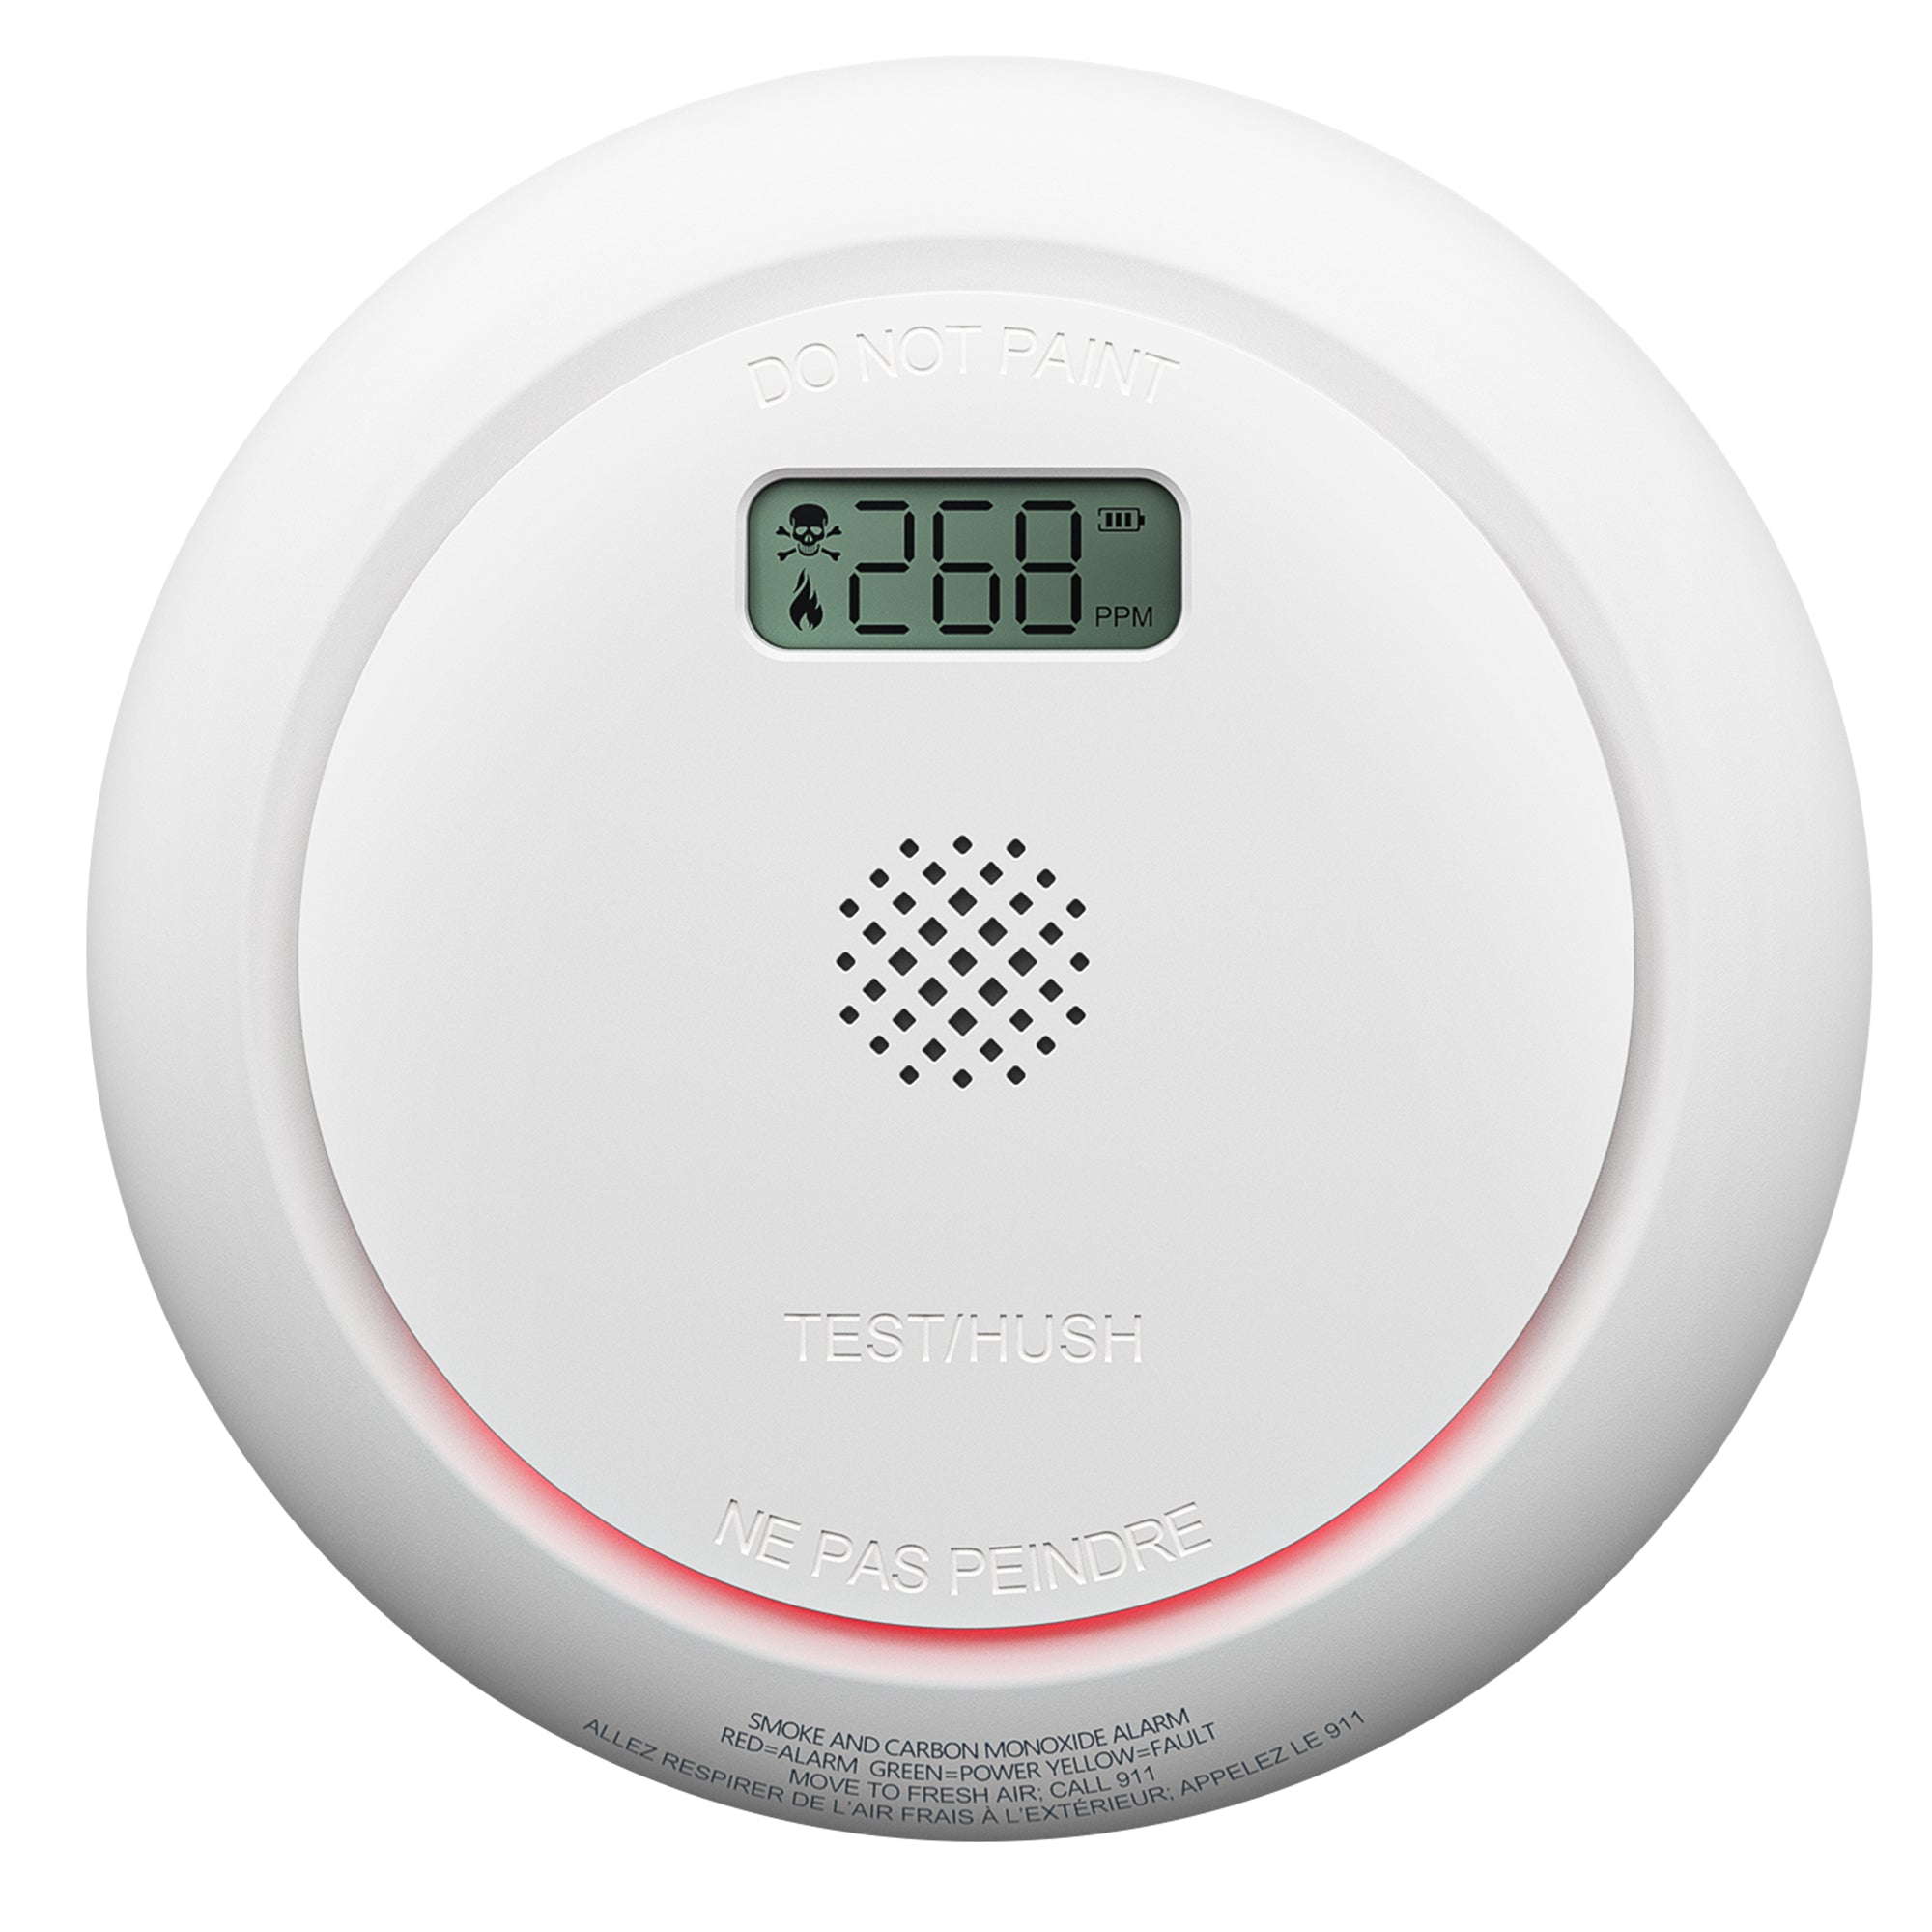 Siterwell GS888C Wireless Connect Smoke & CO Alarm